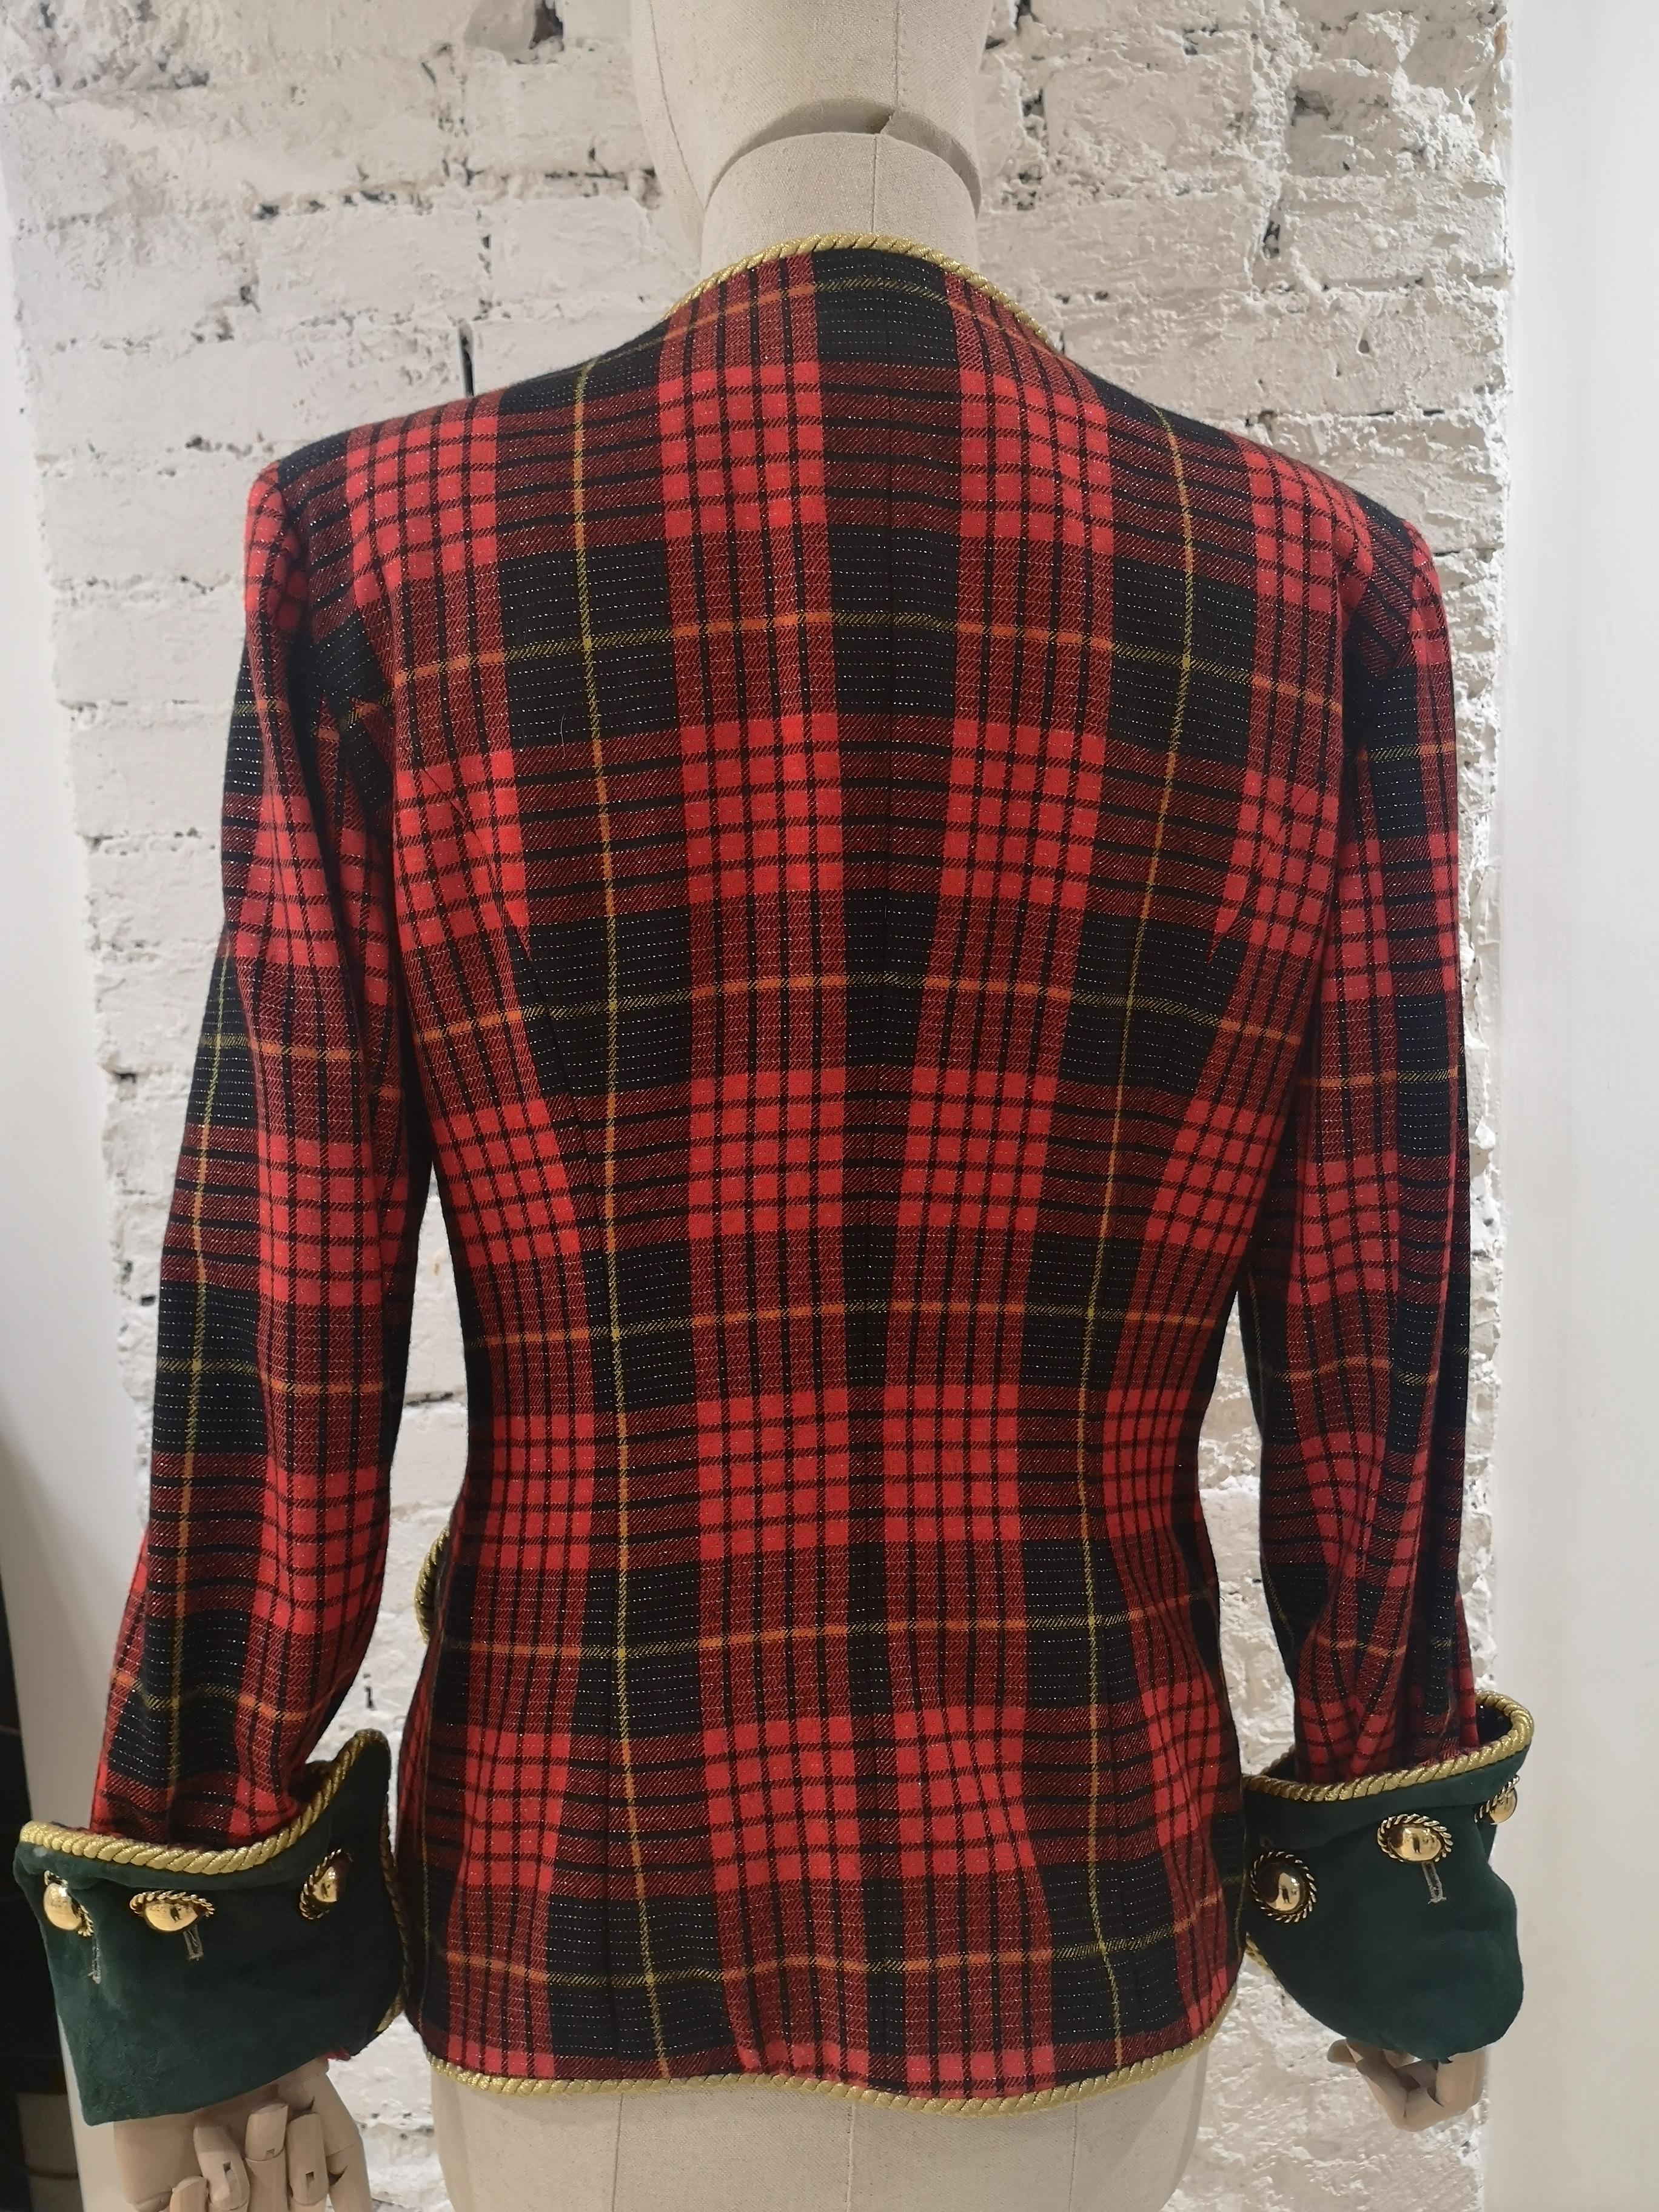 Women's Moschino couture tartan wool vintage jacket